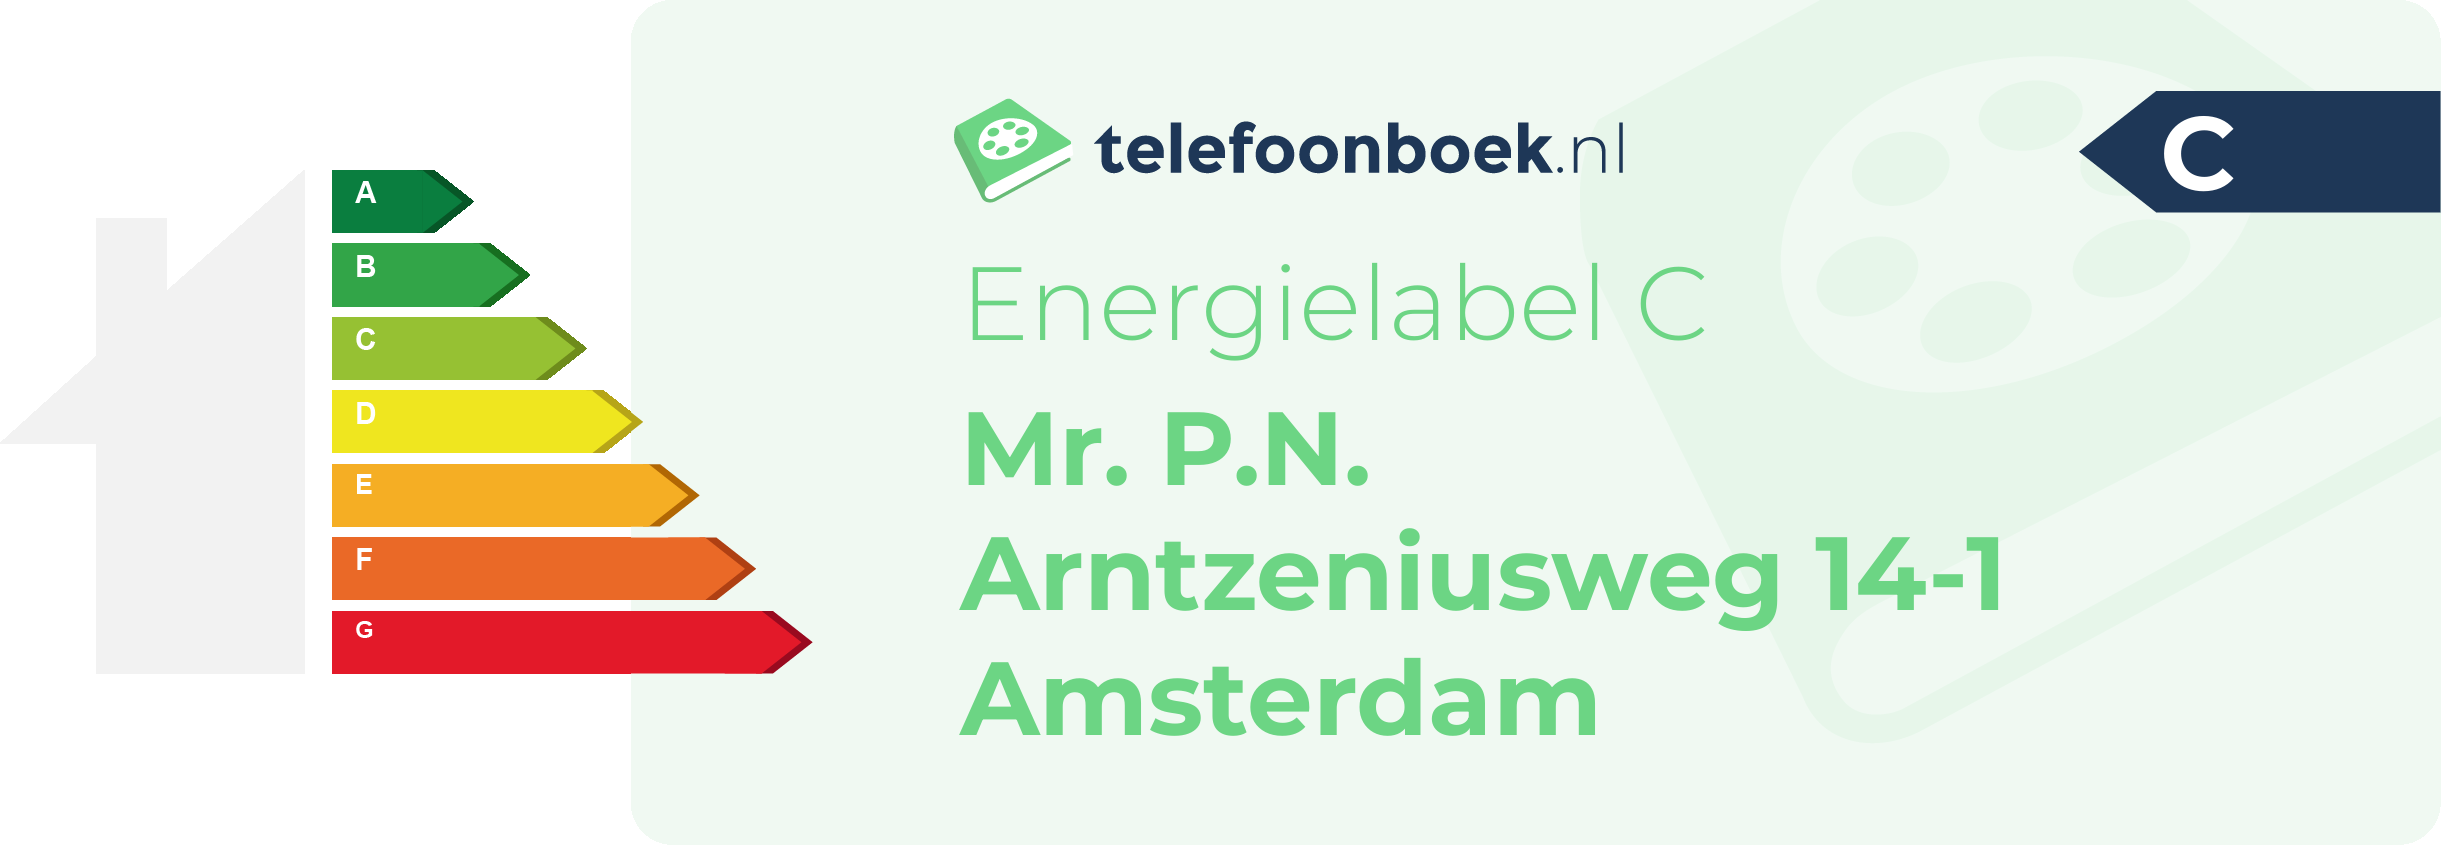 Energielabel Mr. P.N. Arntzeniusweg 14-1 Amsterdam